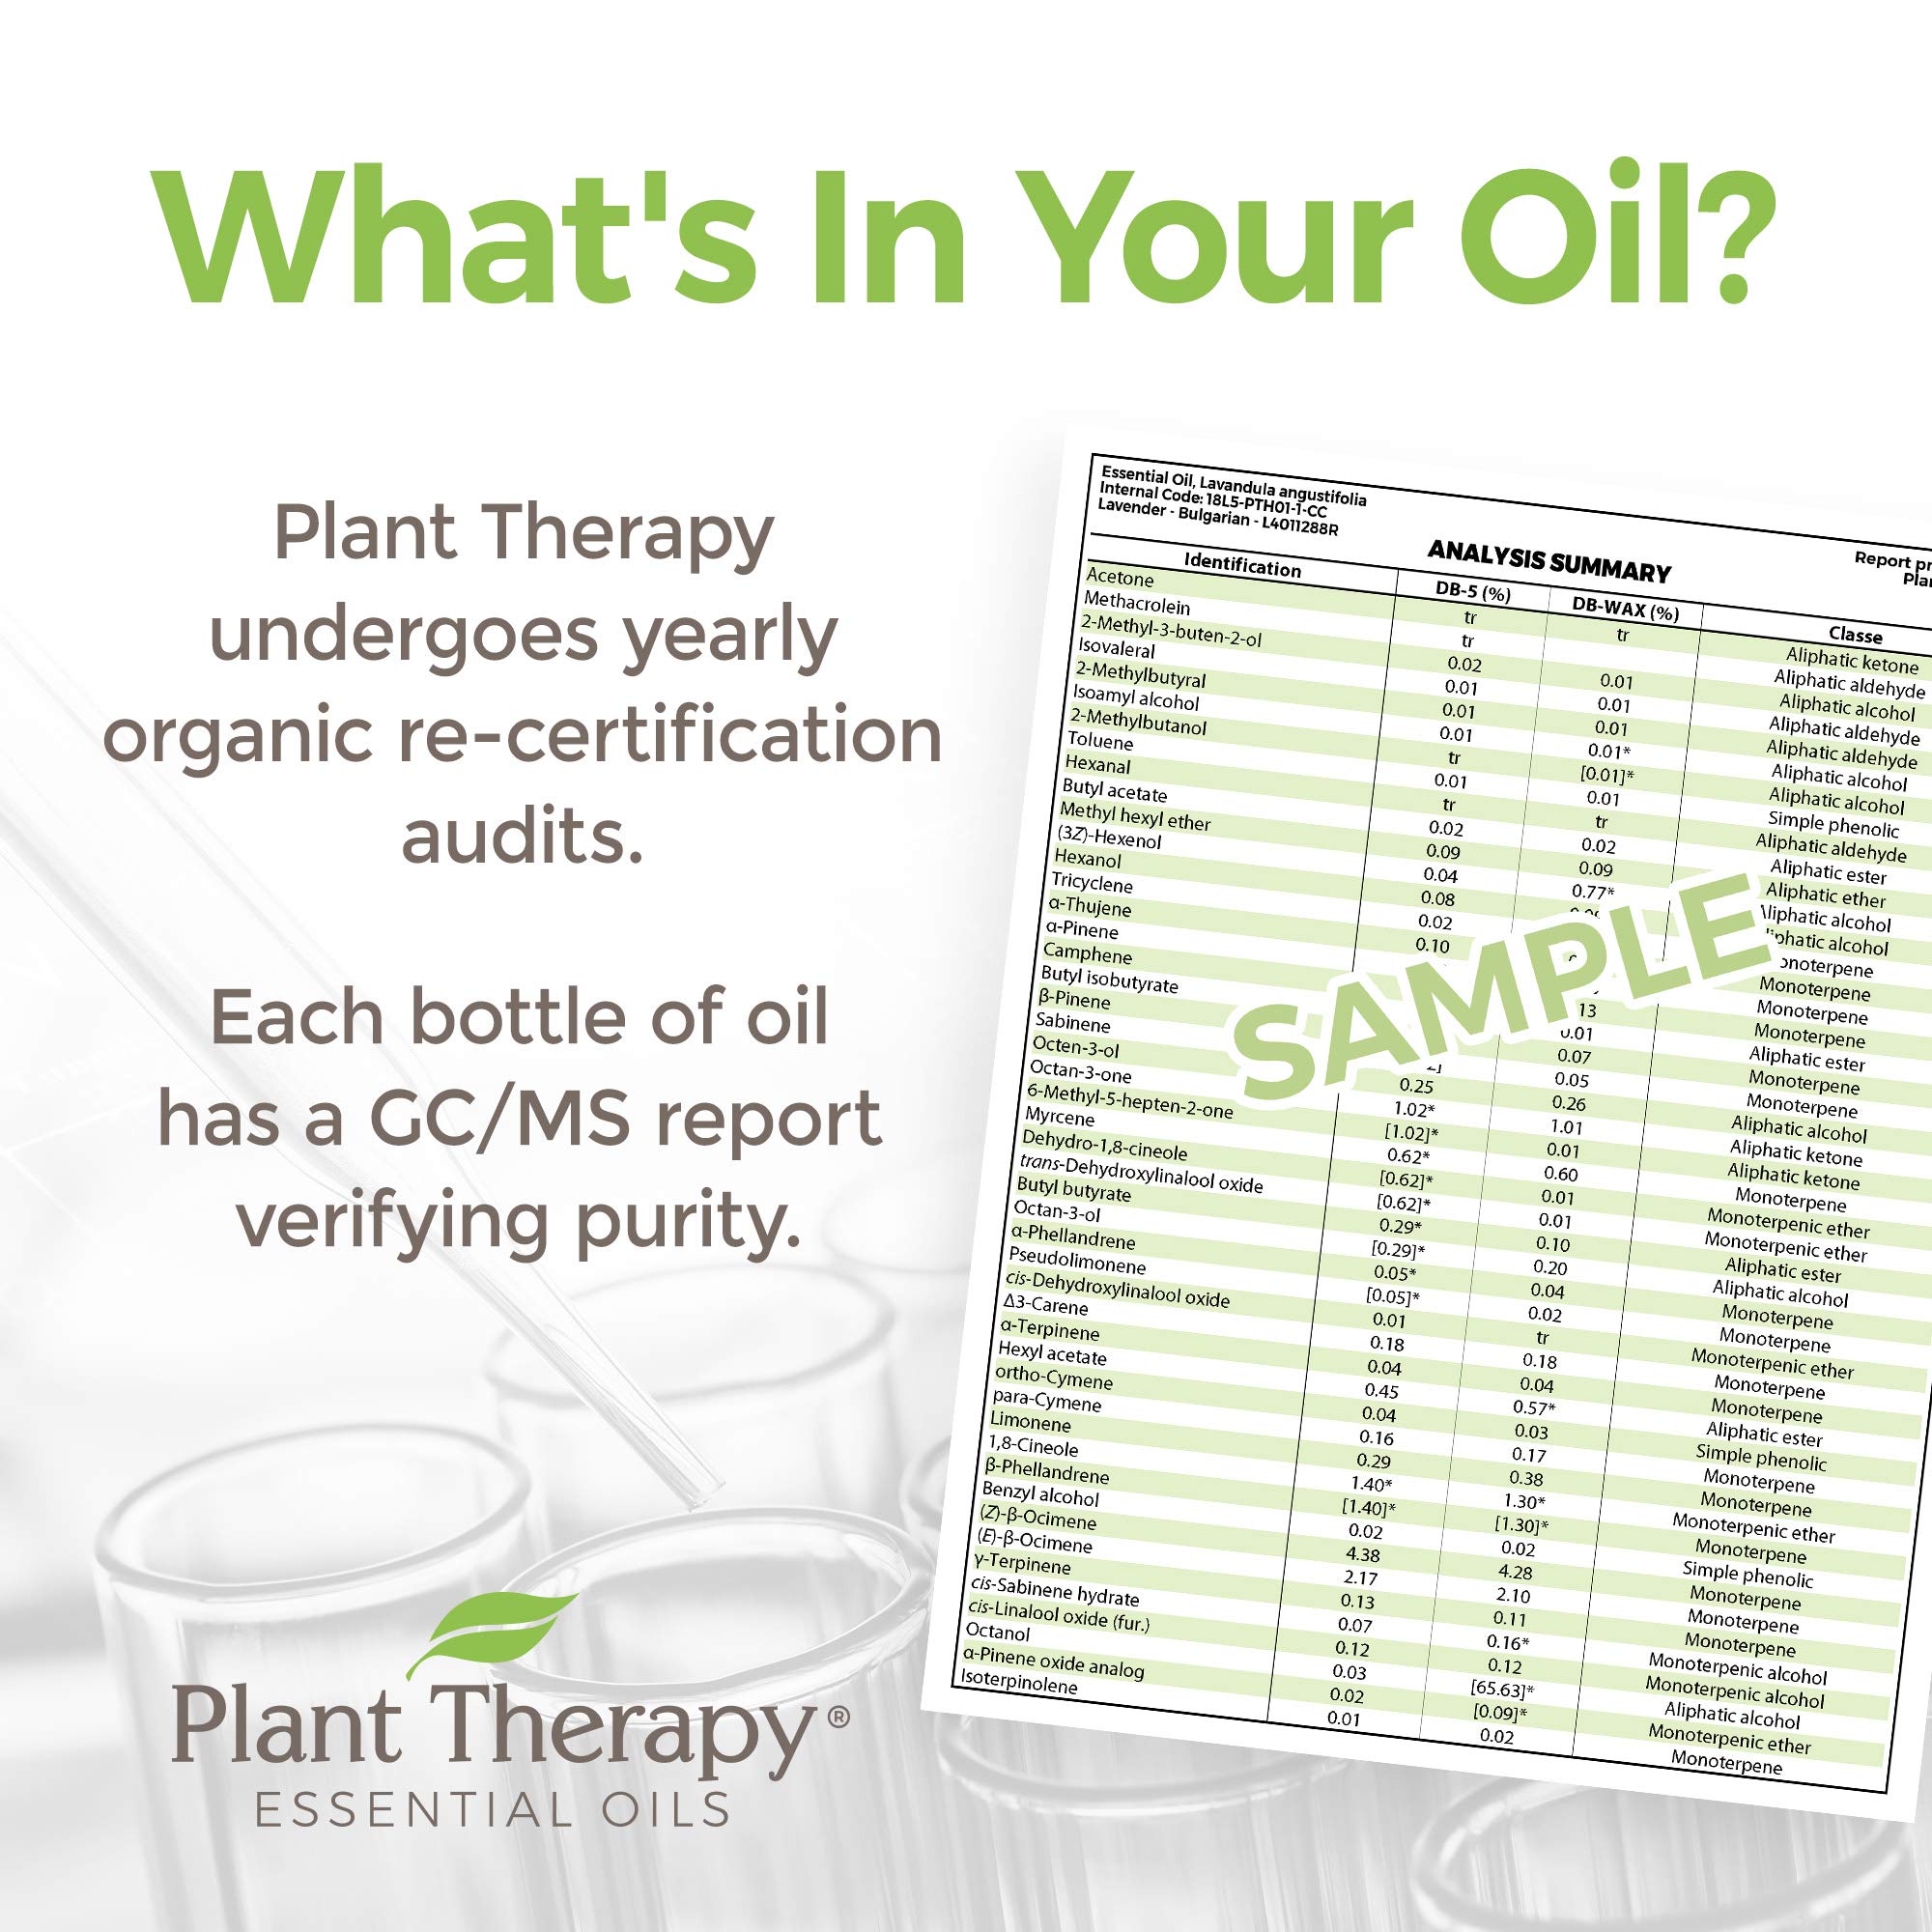 Plant Therapy Organic Frankincense Serrata Essential Oil 100% Pure, USDA Certified Organic, Undiluted, Natural Aromatherapy, Therapeutic Grade 10 mL (1/3 oz)